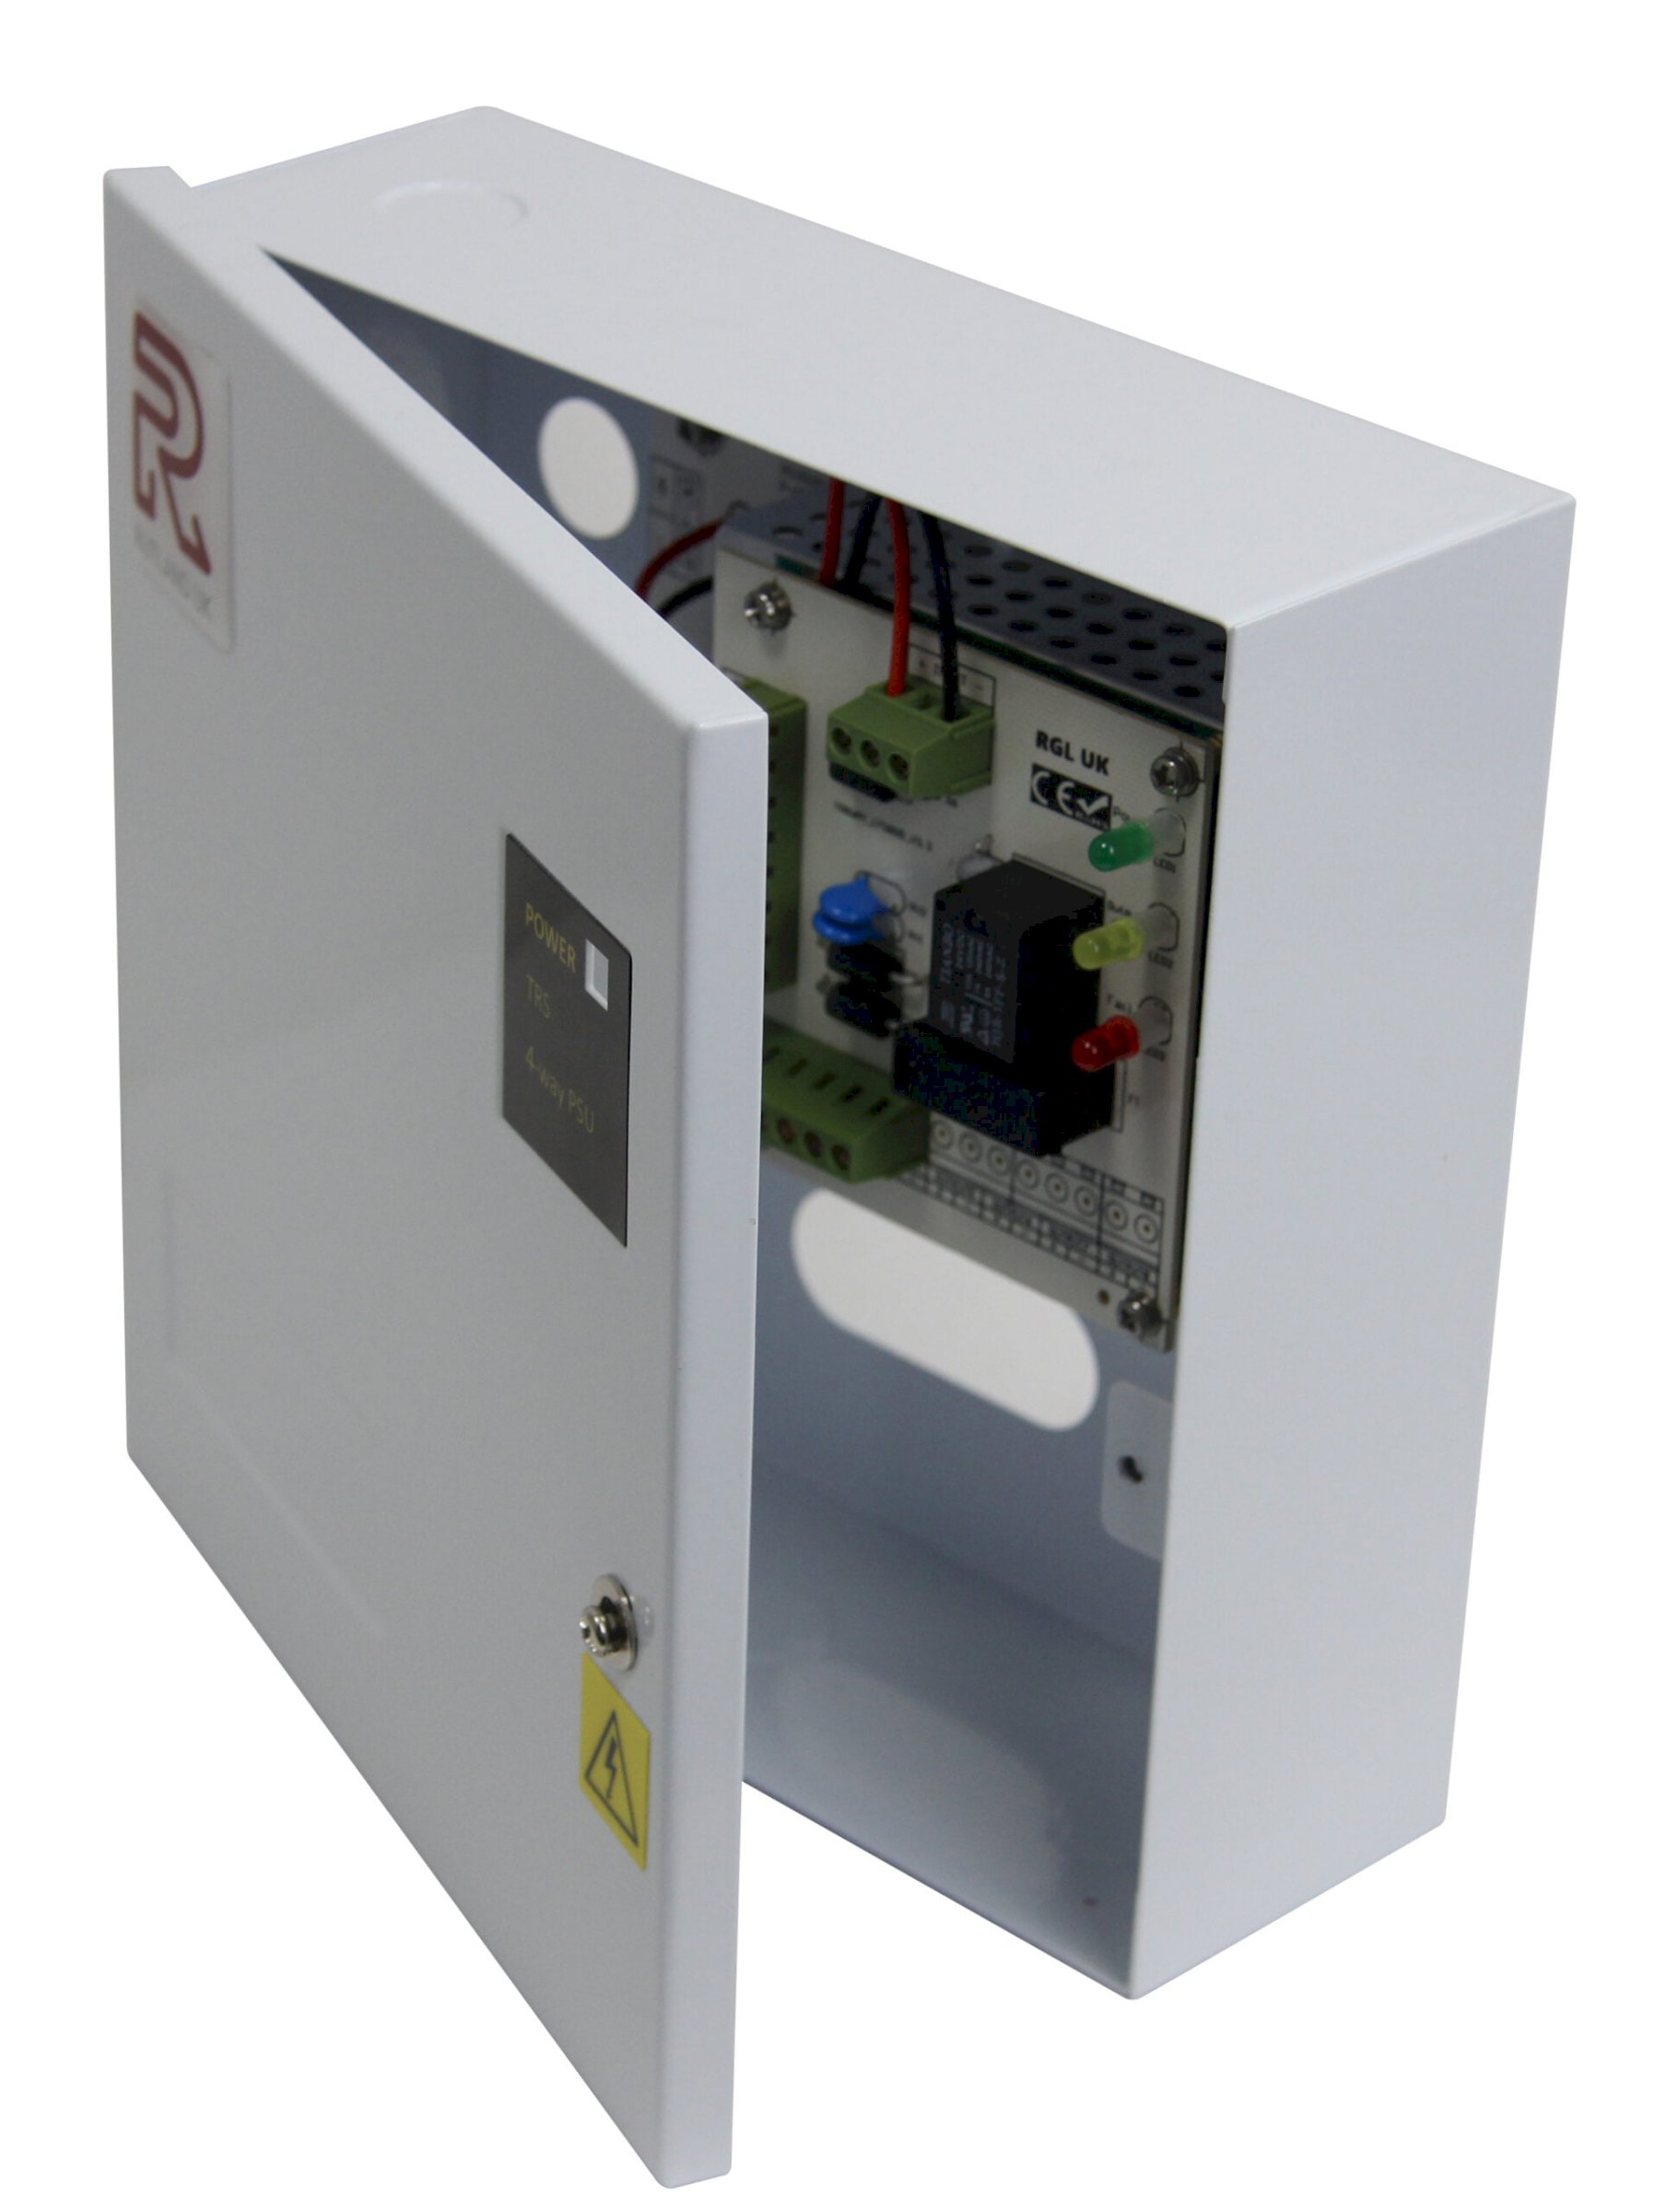 PSU.1224.9 – Power Supply Unit – Proline Hardware, Architectural Hardware